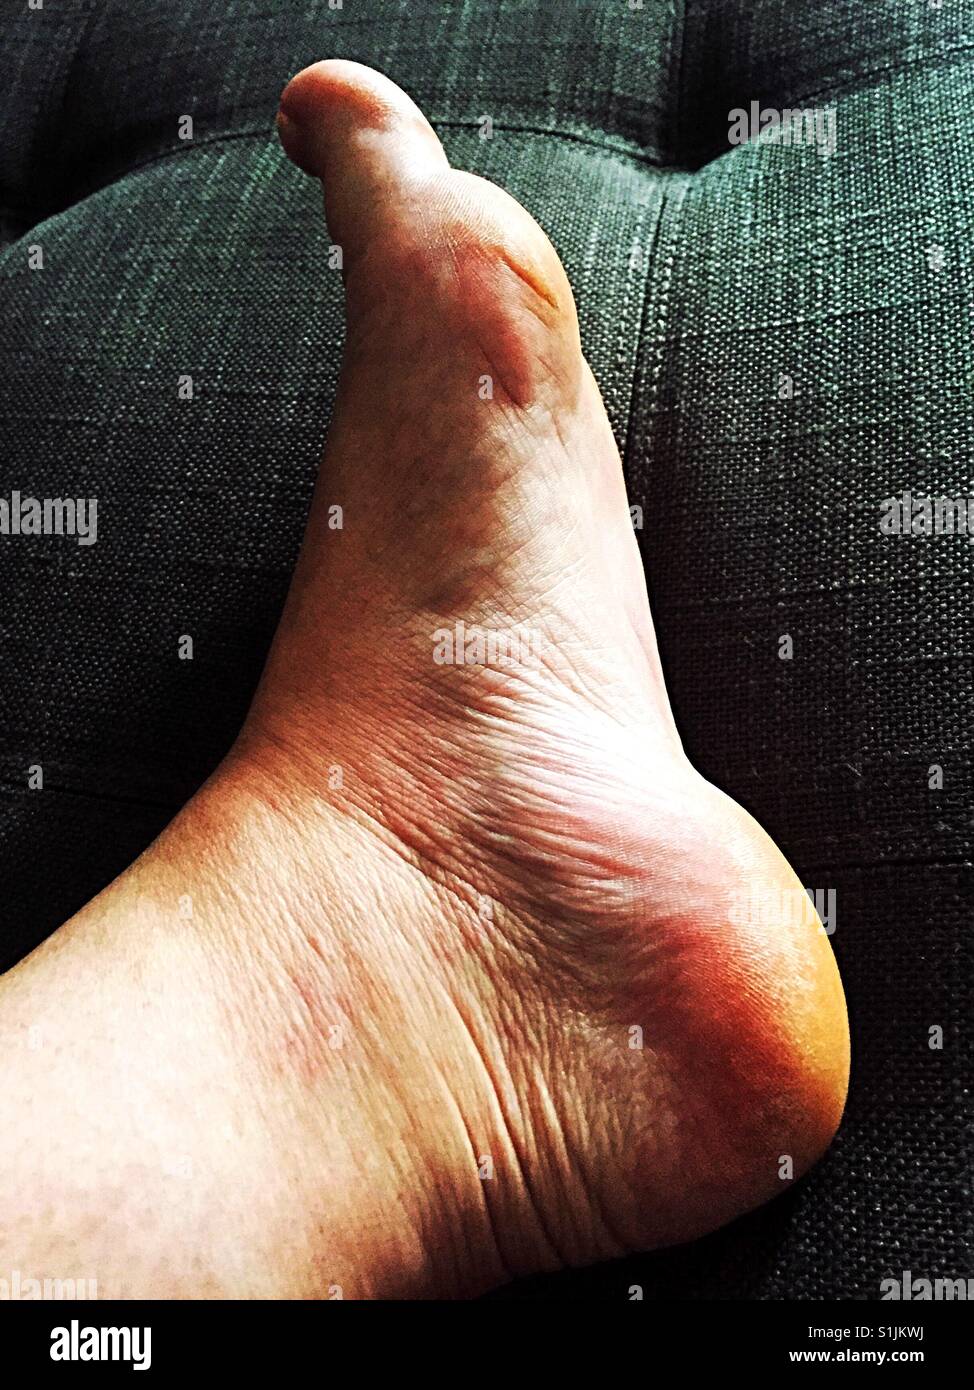 Old, wrinkly, swollen feet Stock Photo